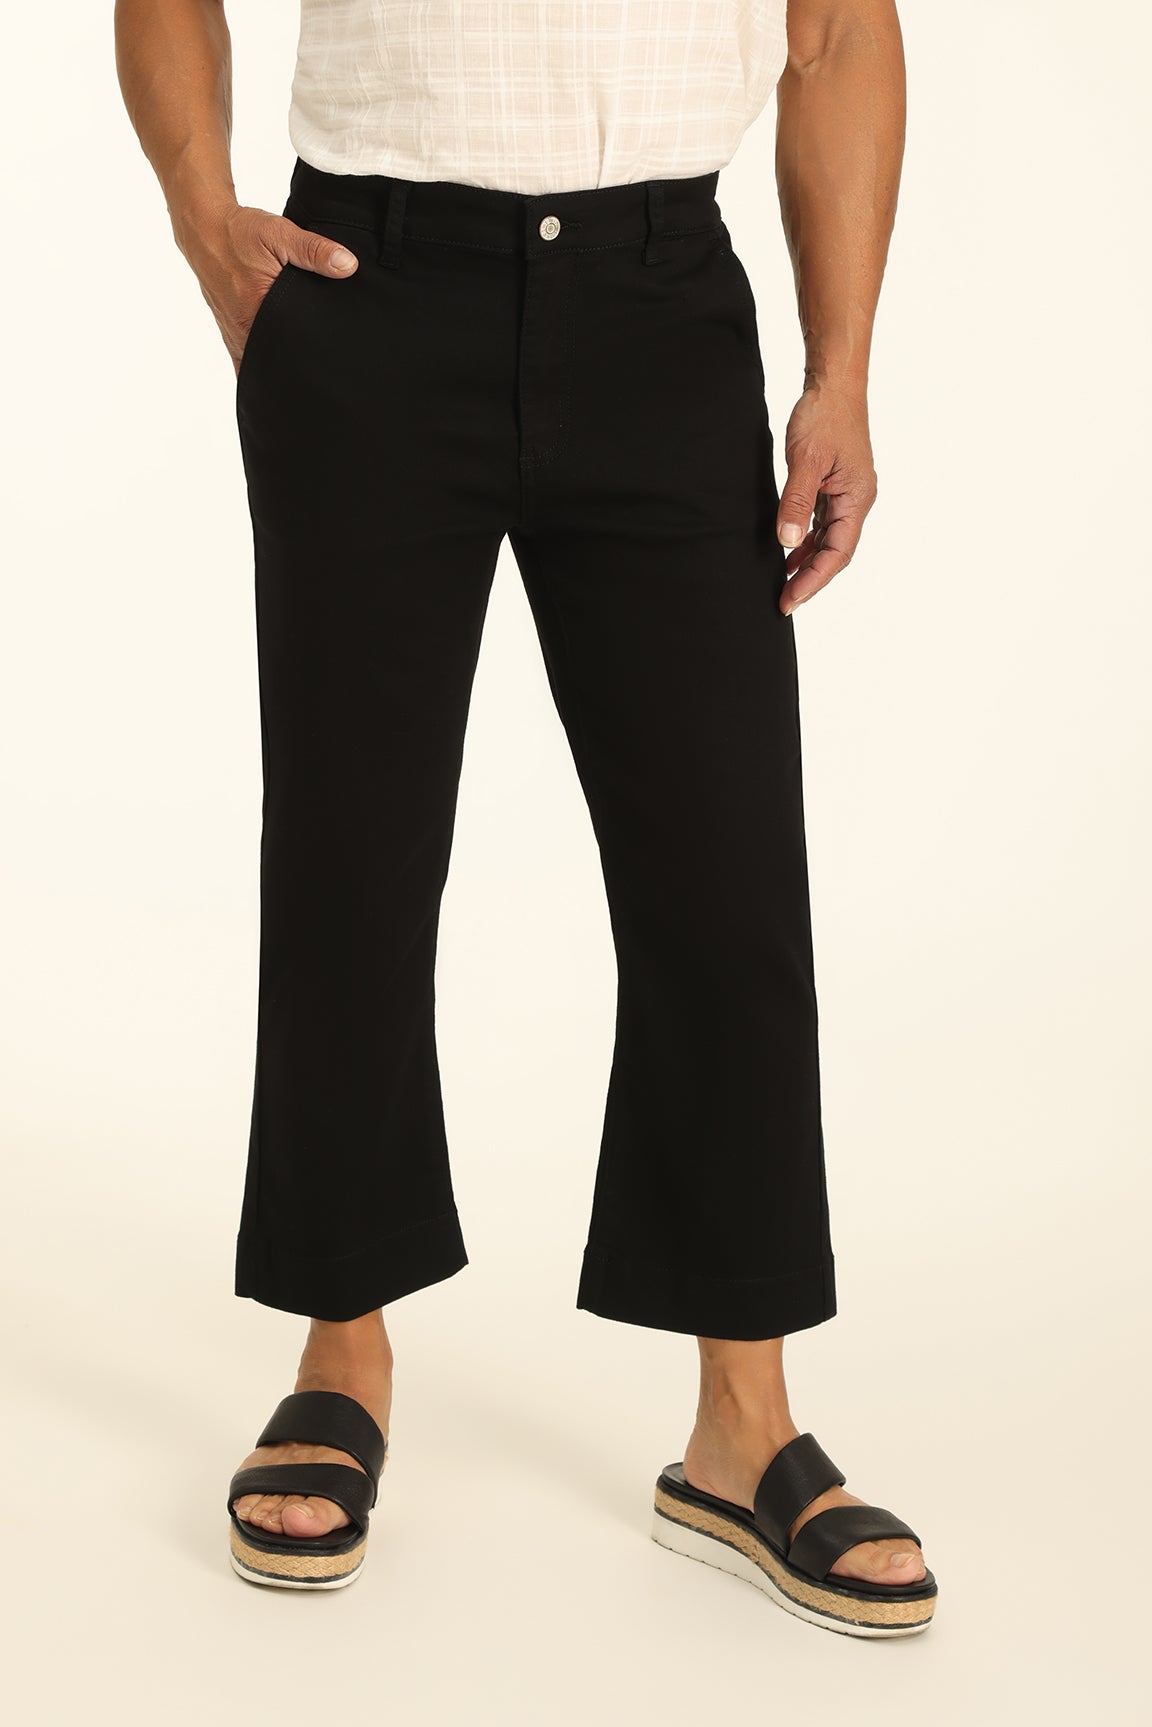 Coloured Denim Crop Jean in Black